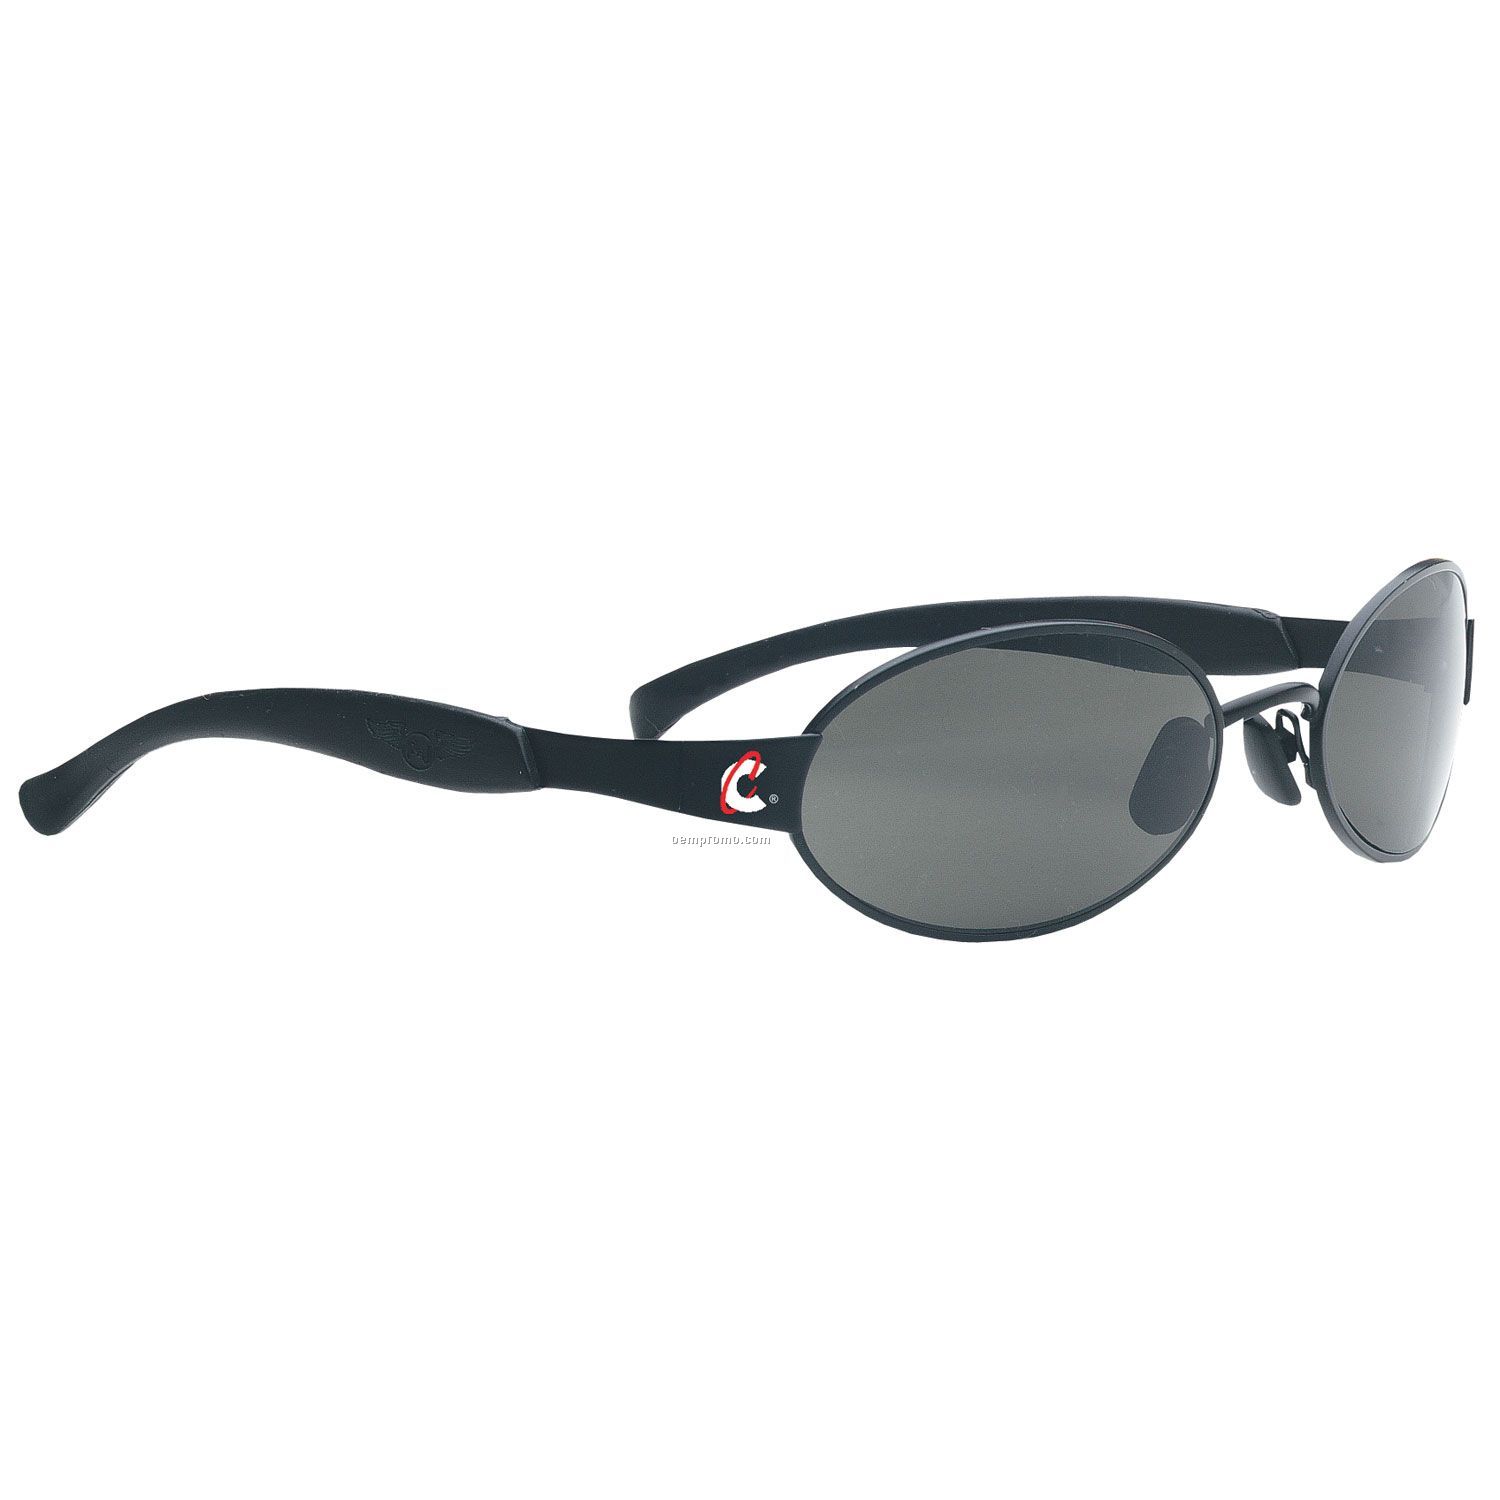 Rio Metals Modified Metal Oval Black Frame Sunglasses W/ Gray Lens